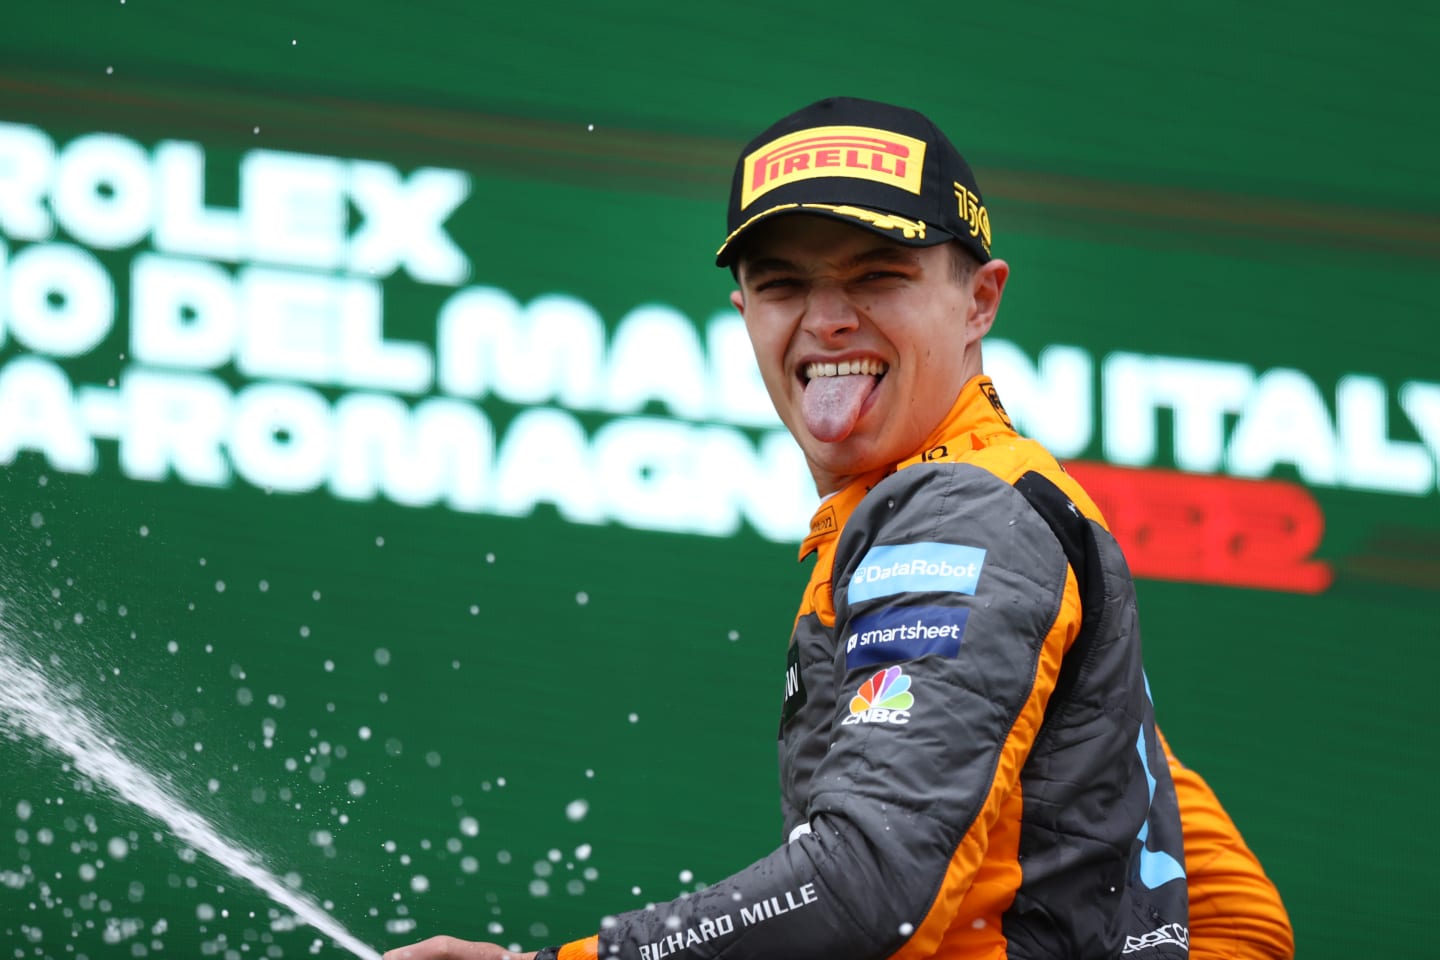 IMOLA, ITALY - APRIL 24: Third placed Lando Norris of Great Britain and McLaren celebrates on the